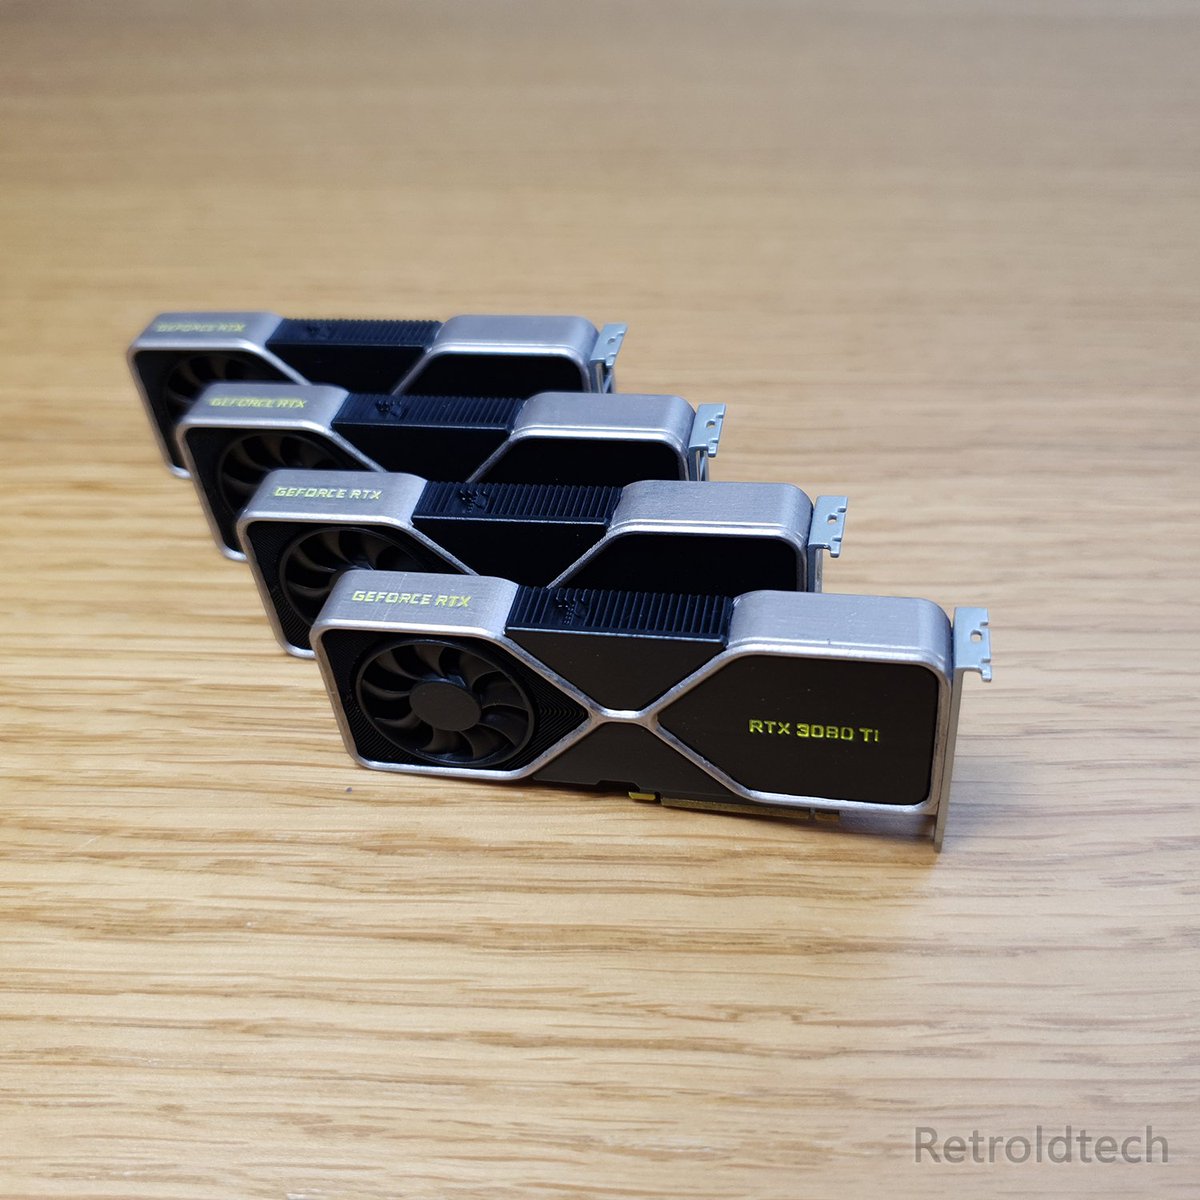 Miniaturized Nvidia RTX 3080 TI 🧐🤏😅
#nvidia #rtx #rtx3080ti #nvidiartx #pcgaming